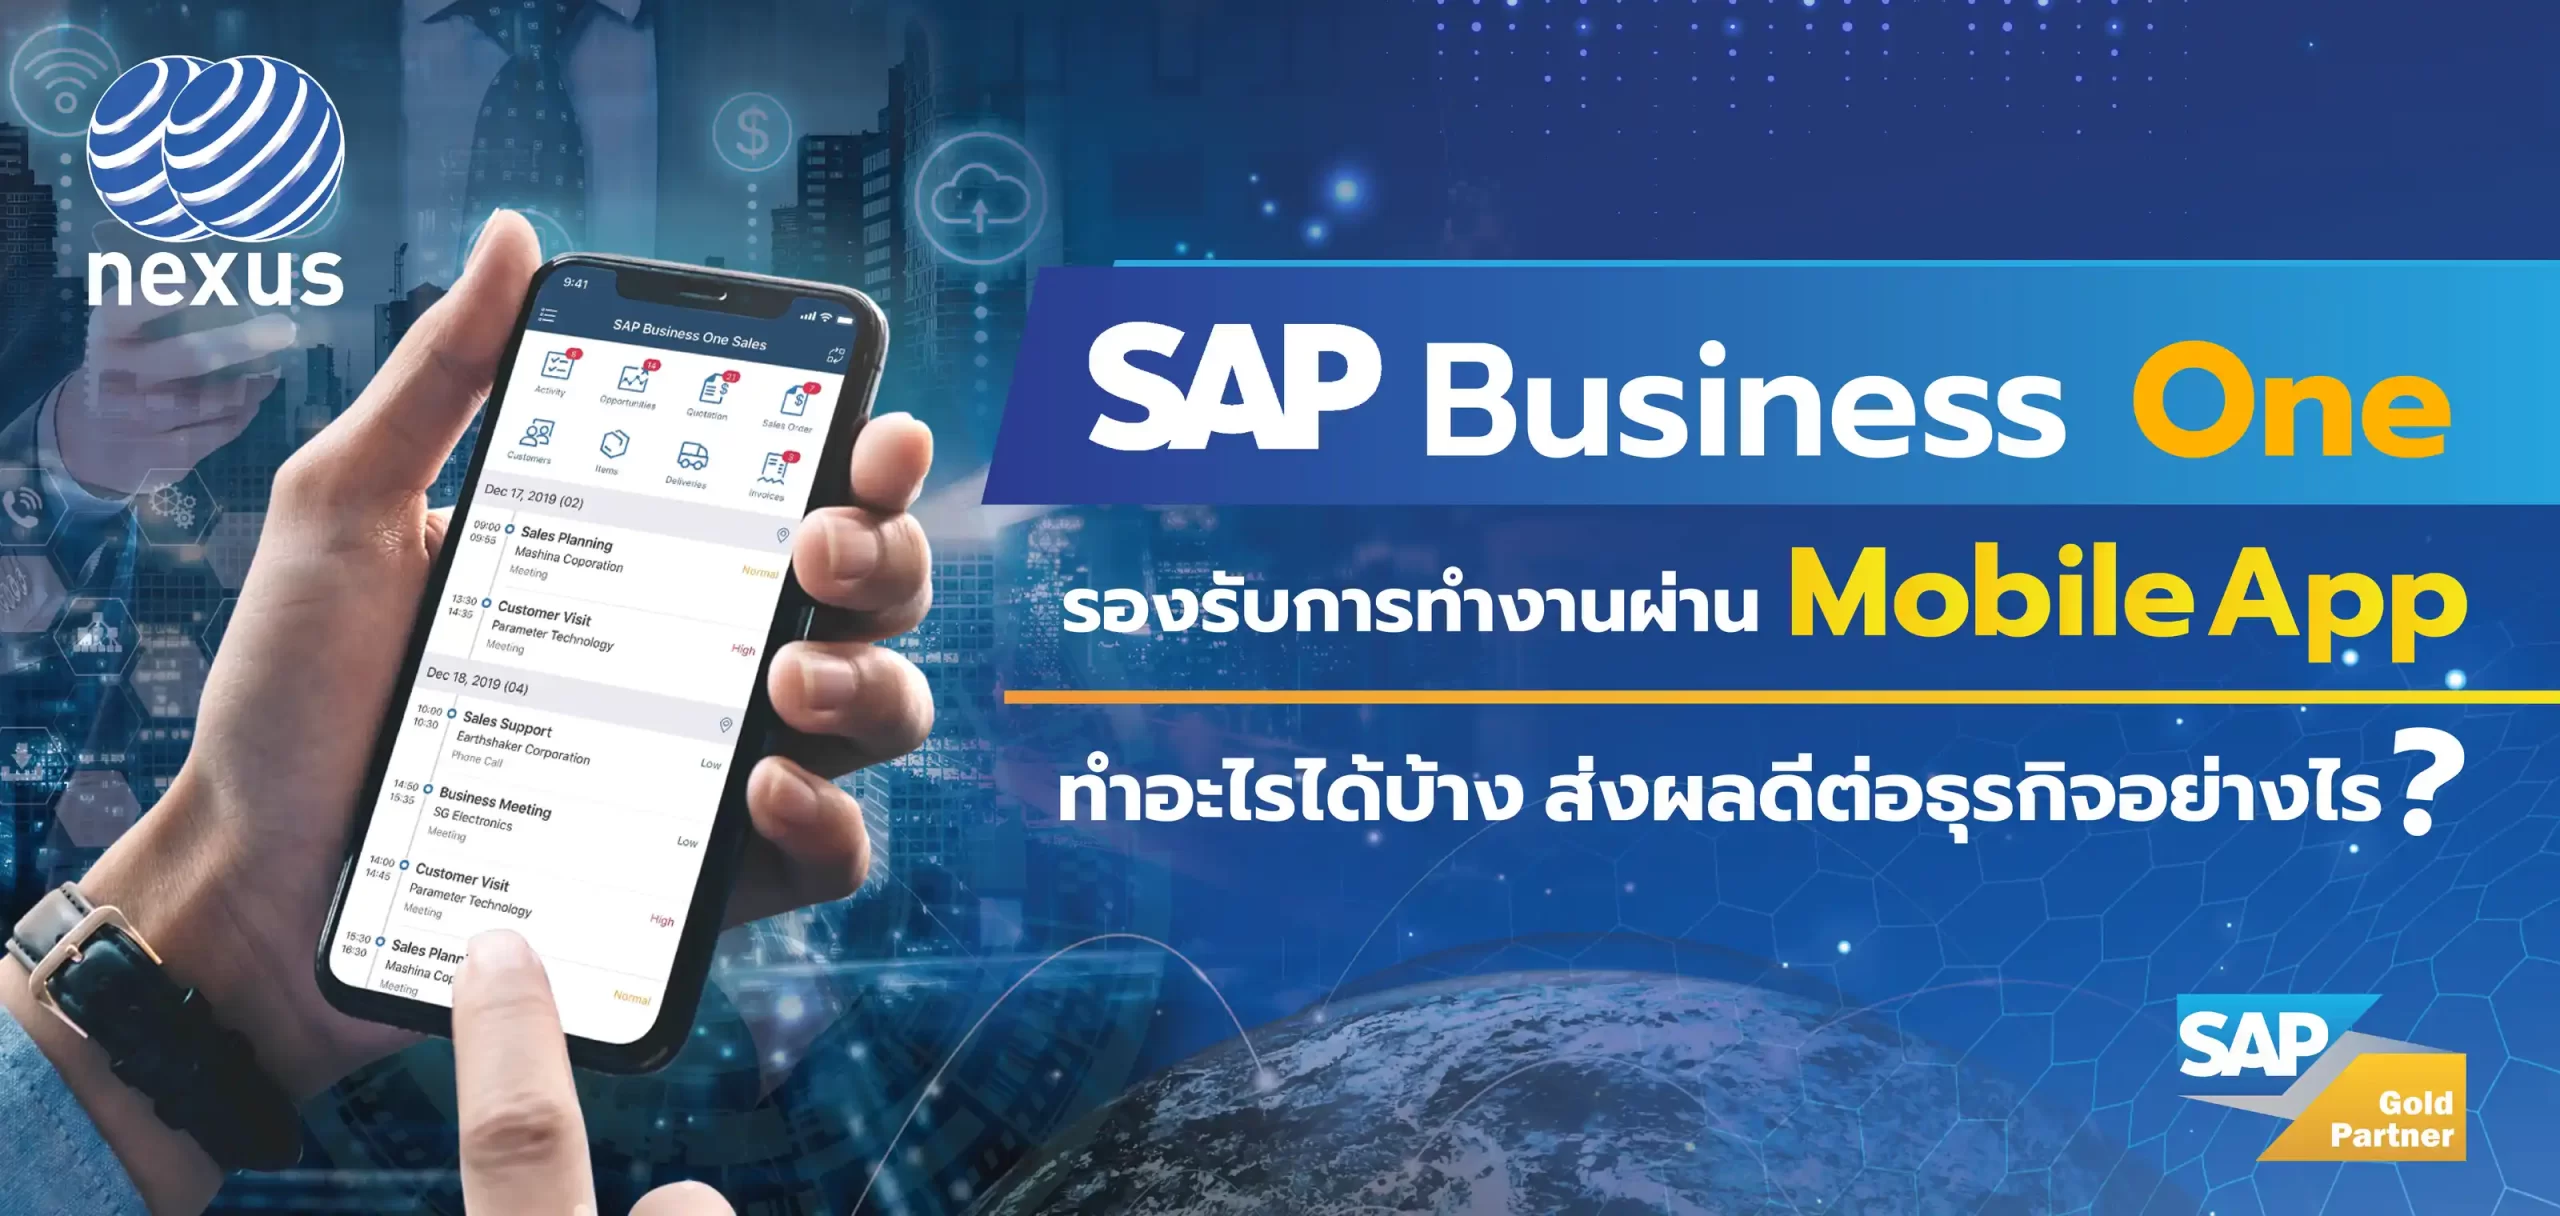 SAP Business One Mobile App ทำอะไรได้บ้าง ส่งผลดีต่อธุรกิจอย่างไร